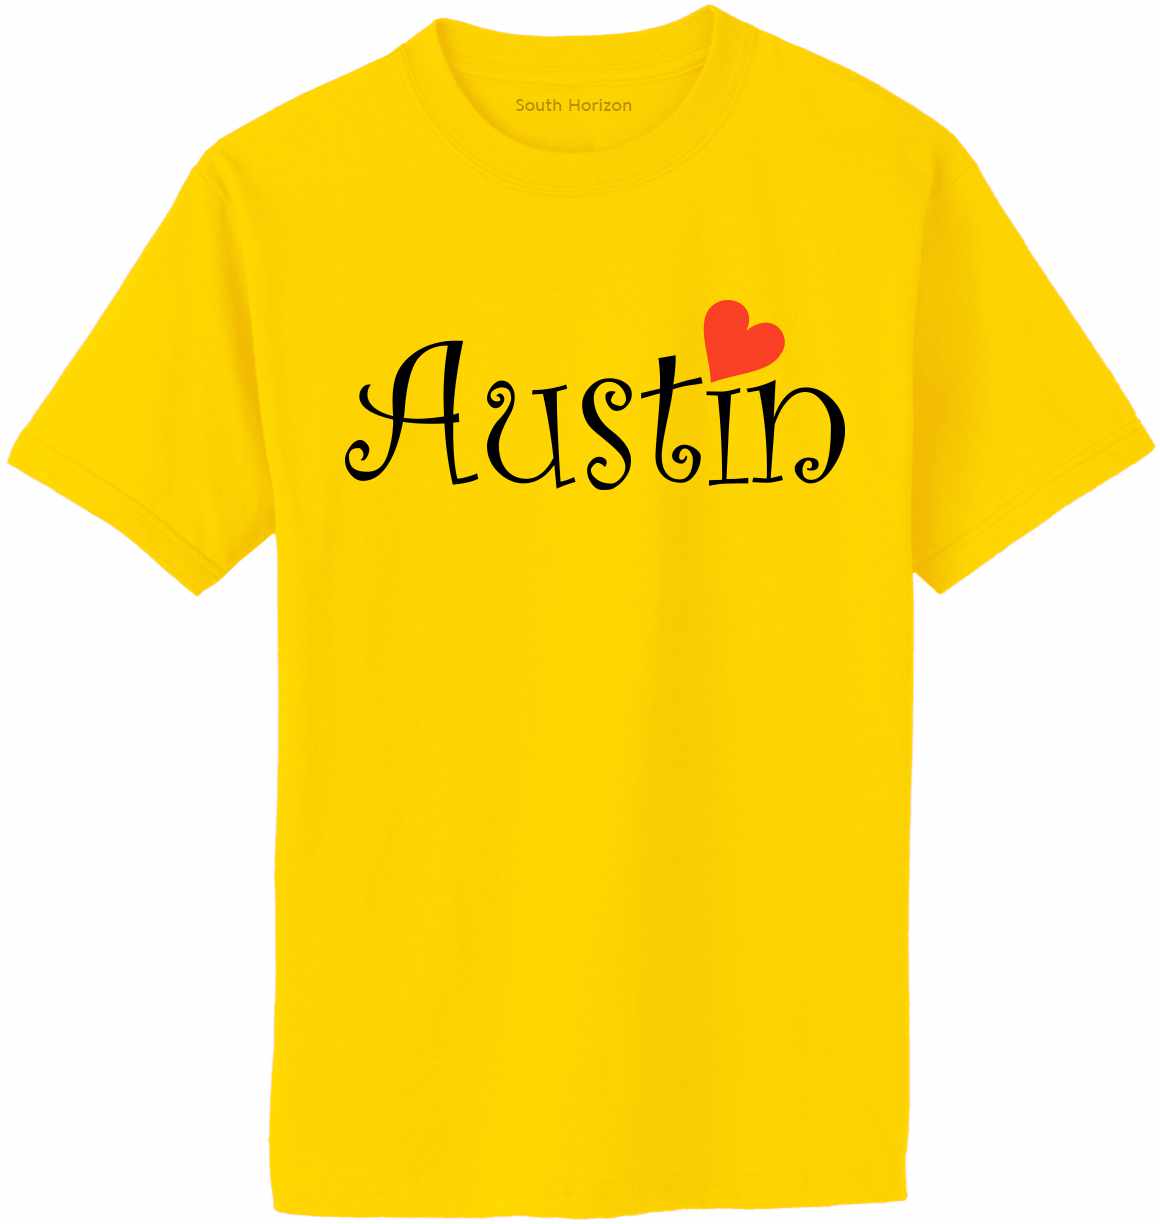 Austin City on Adult T-Shirt (#1338-1)